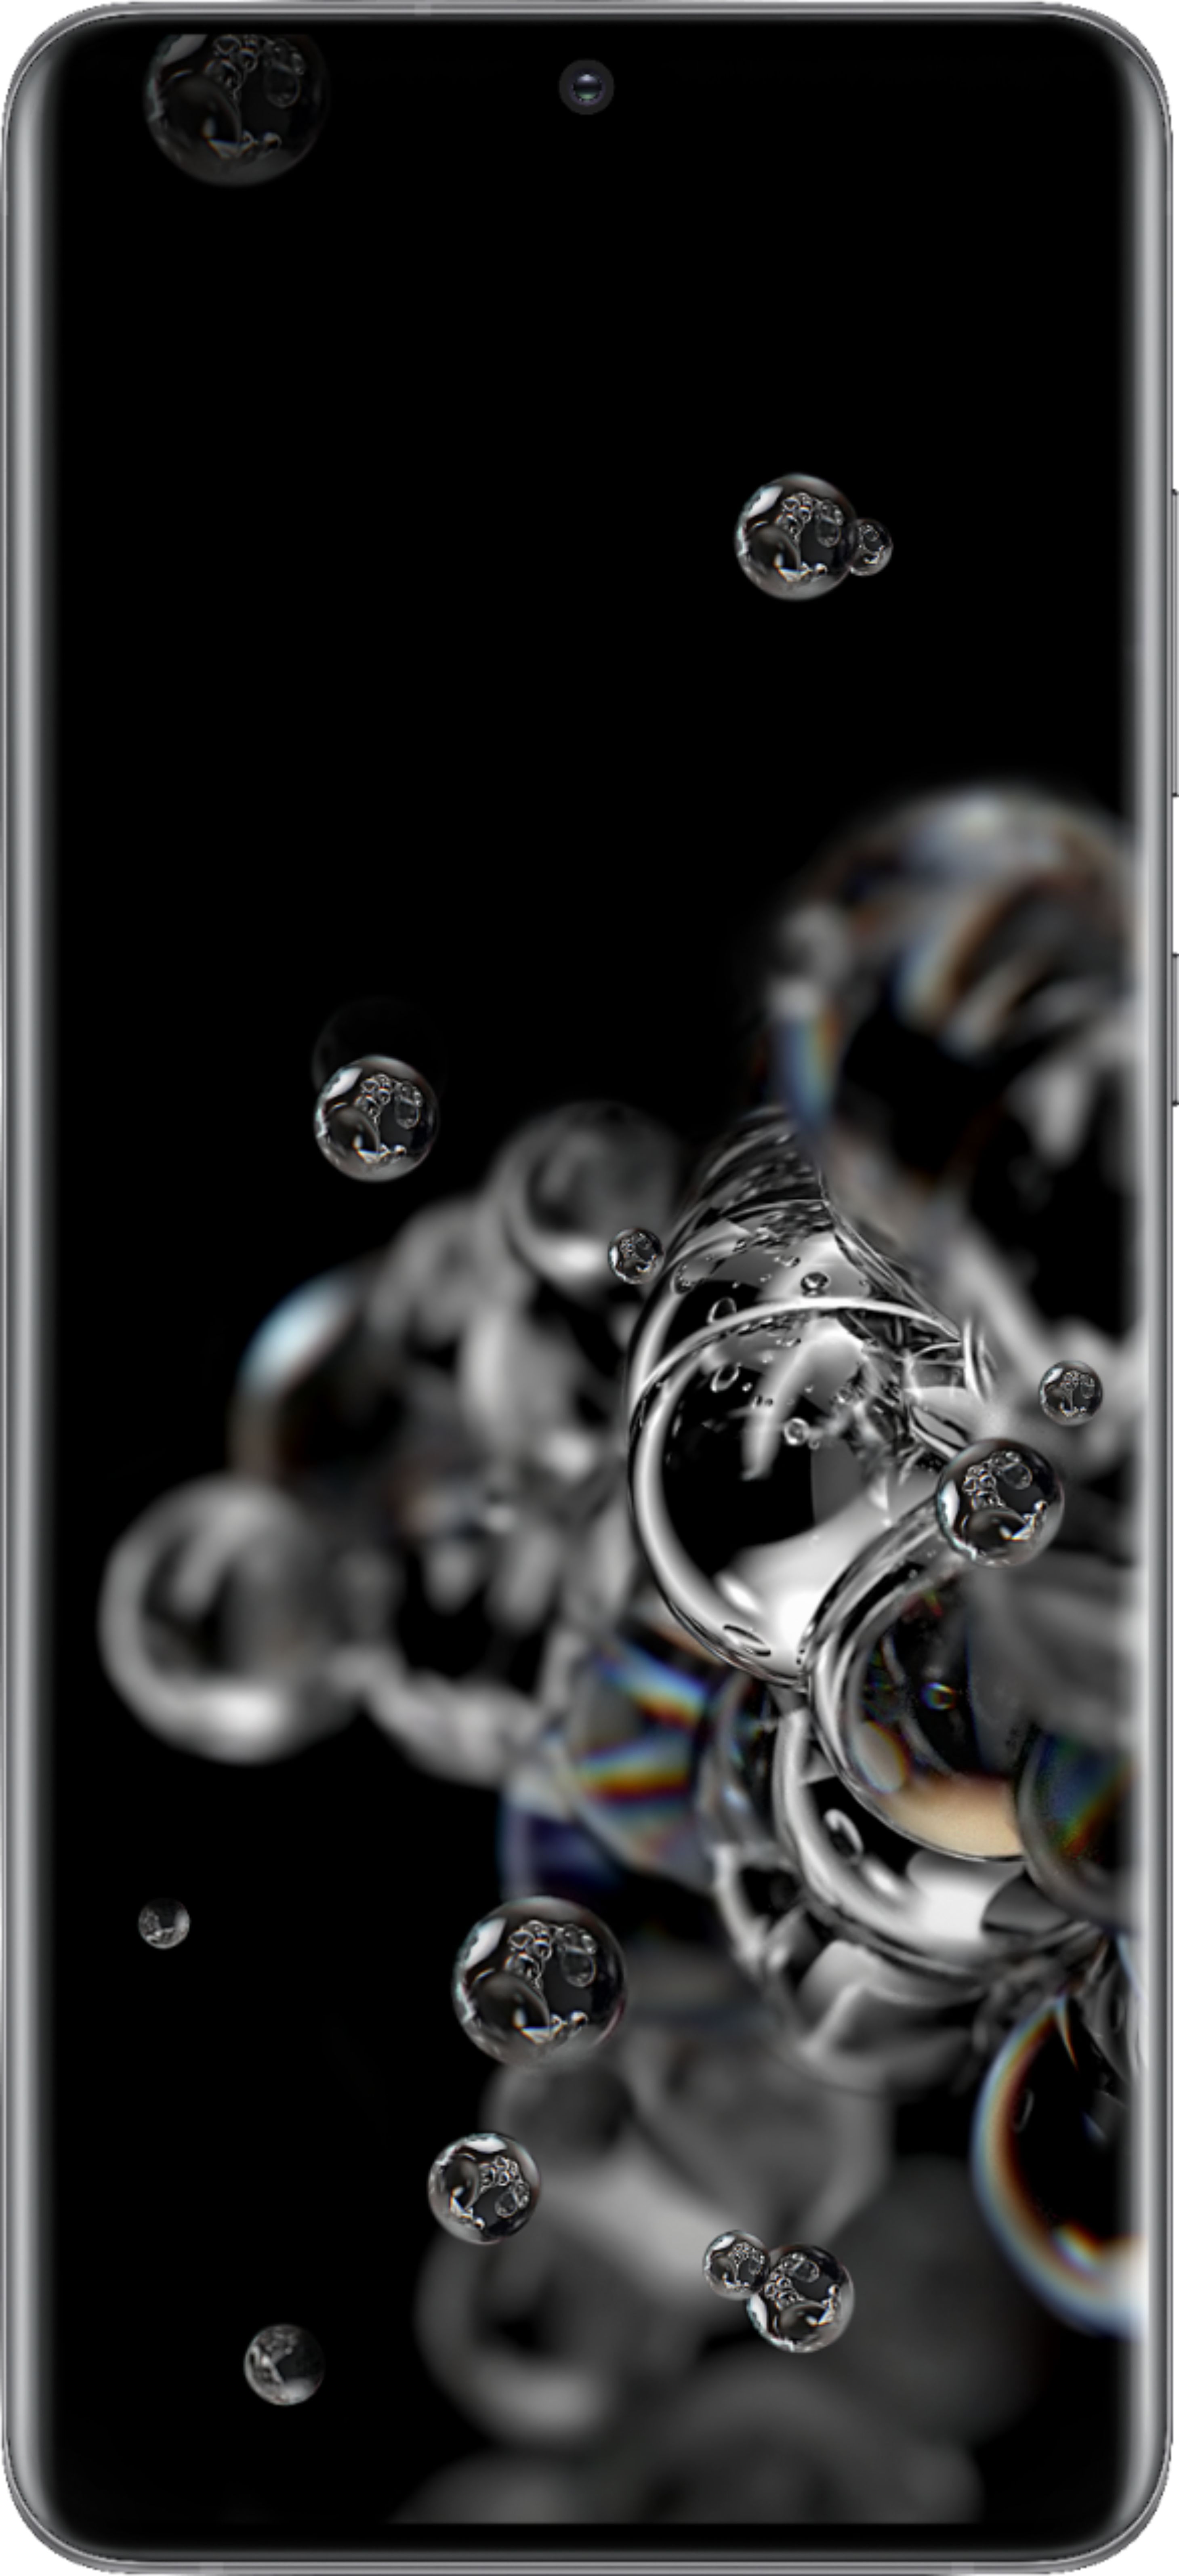 scrapbog Føde Sui Samsung Galaxy S20 Ultra 5G Enabled 128GB Cosmic Gray (Verizon) SMG988UZAV  - Best Buy